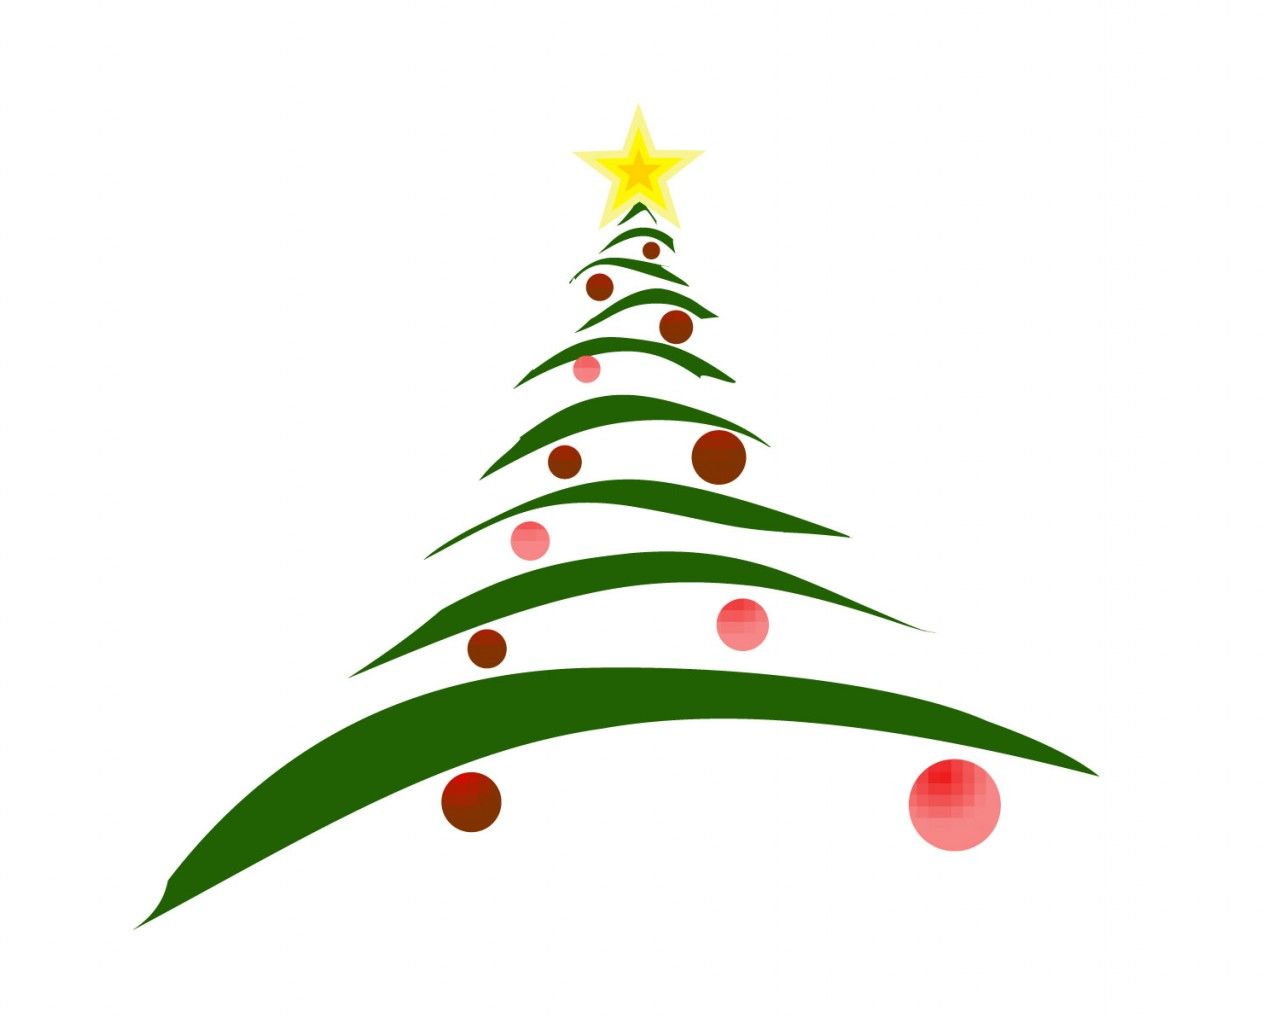 Christmas Tree Drawing Stock Vector Cienpies 2127690 on ClipArt LKfNn4G4. Christmas tree wallpaper, Christmas tree image, Ceramic christmas trees